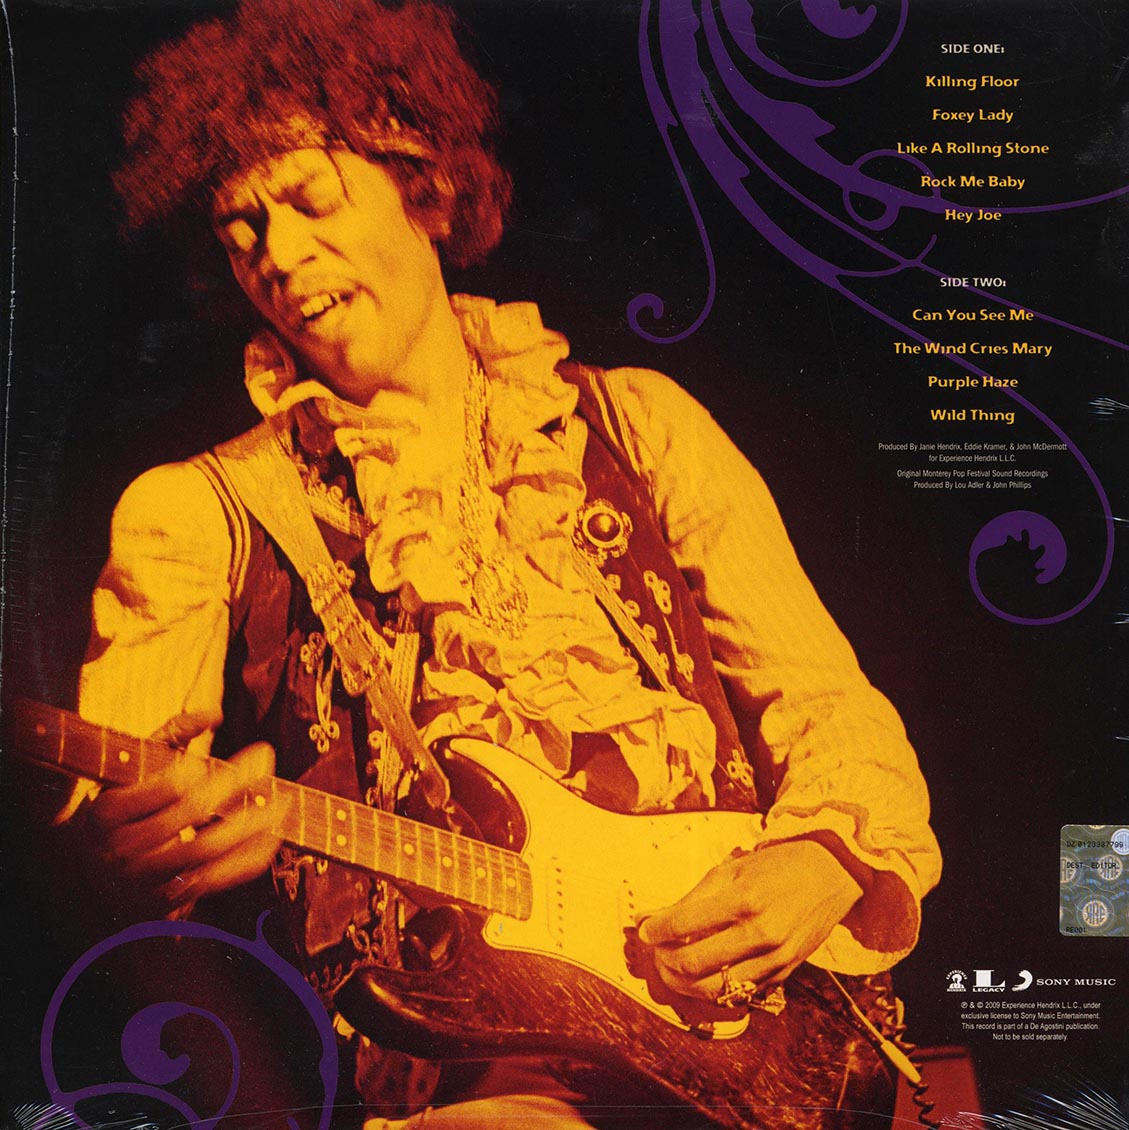 The Jimi Hendrix Experience - Live At Monterey (180g) (remastered) - Vinyl LP, LP